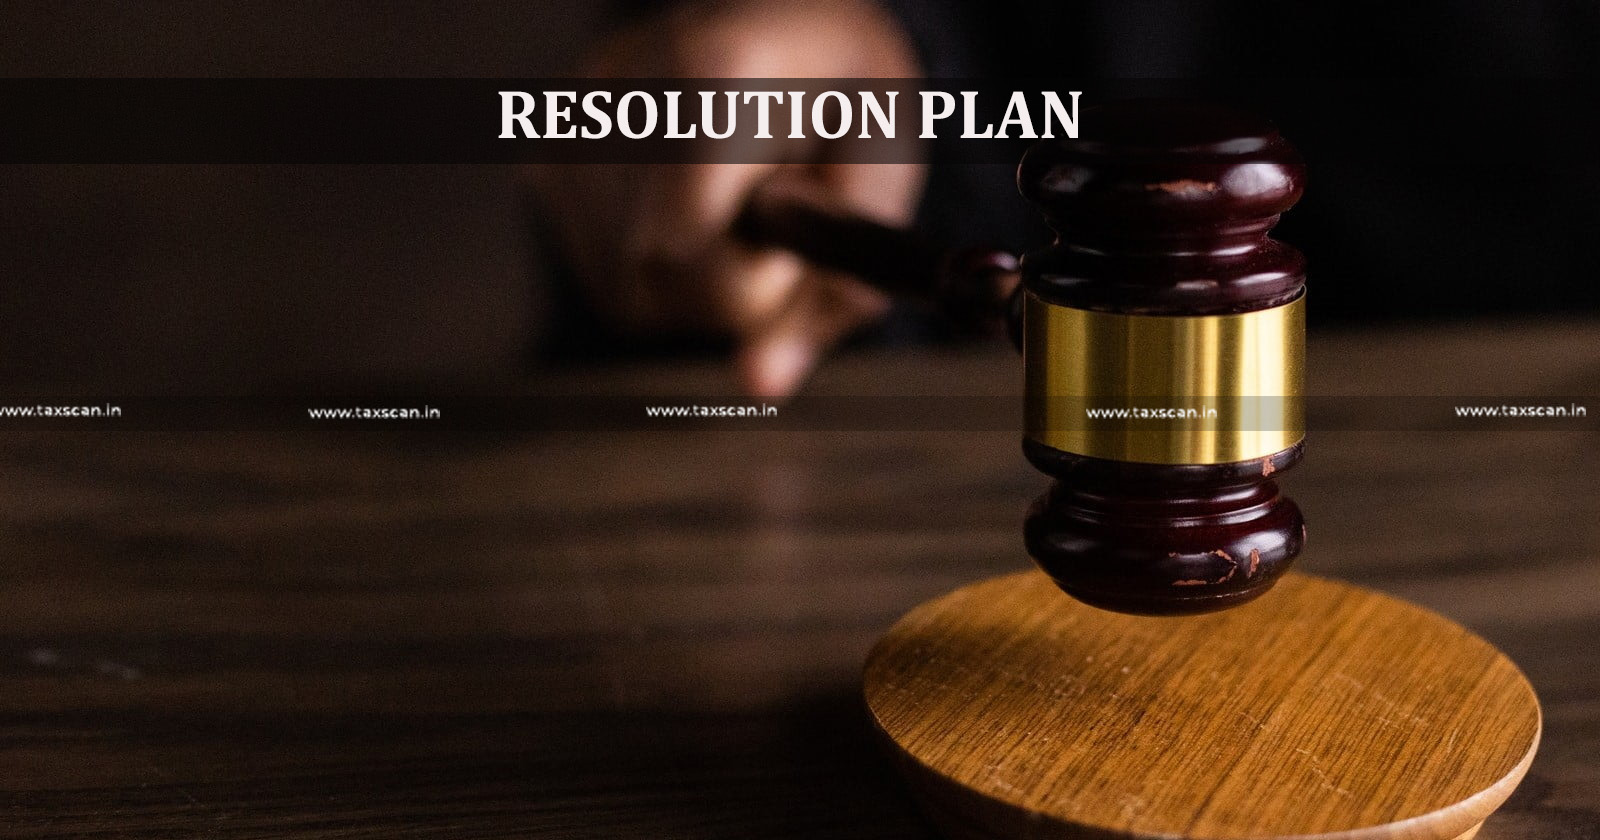 Resolution Plan - MSME Registration - CIRP - Supreme Court - Supreme Court on resolution plan - CIRP commencement - Promoter eligibility - taxscan